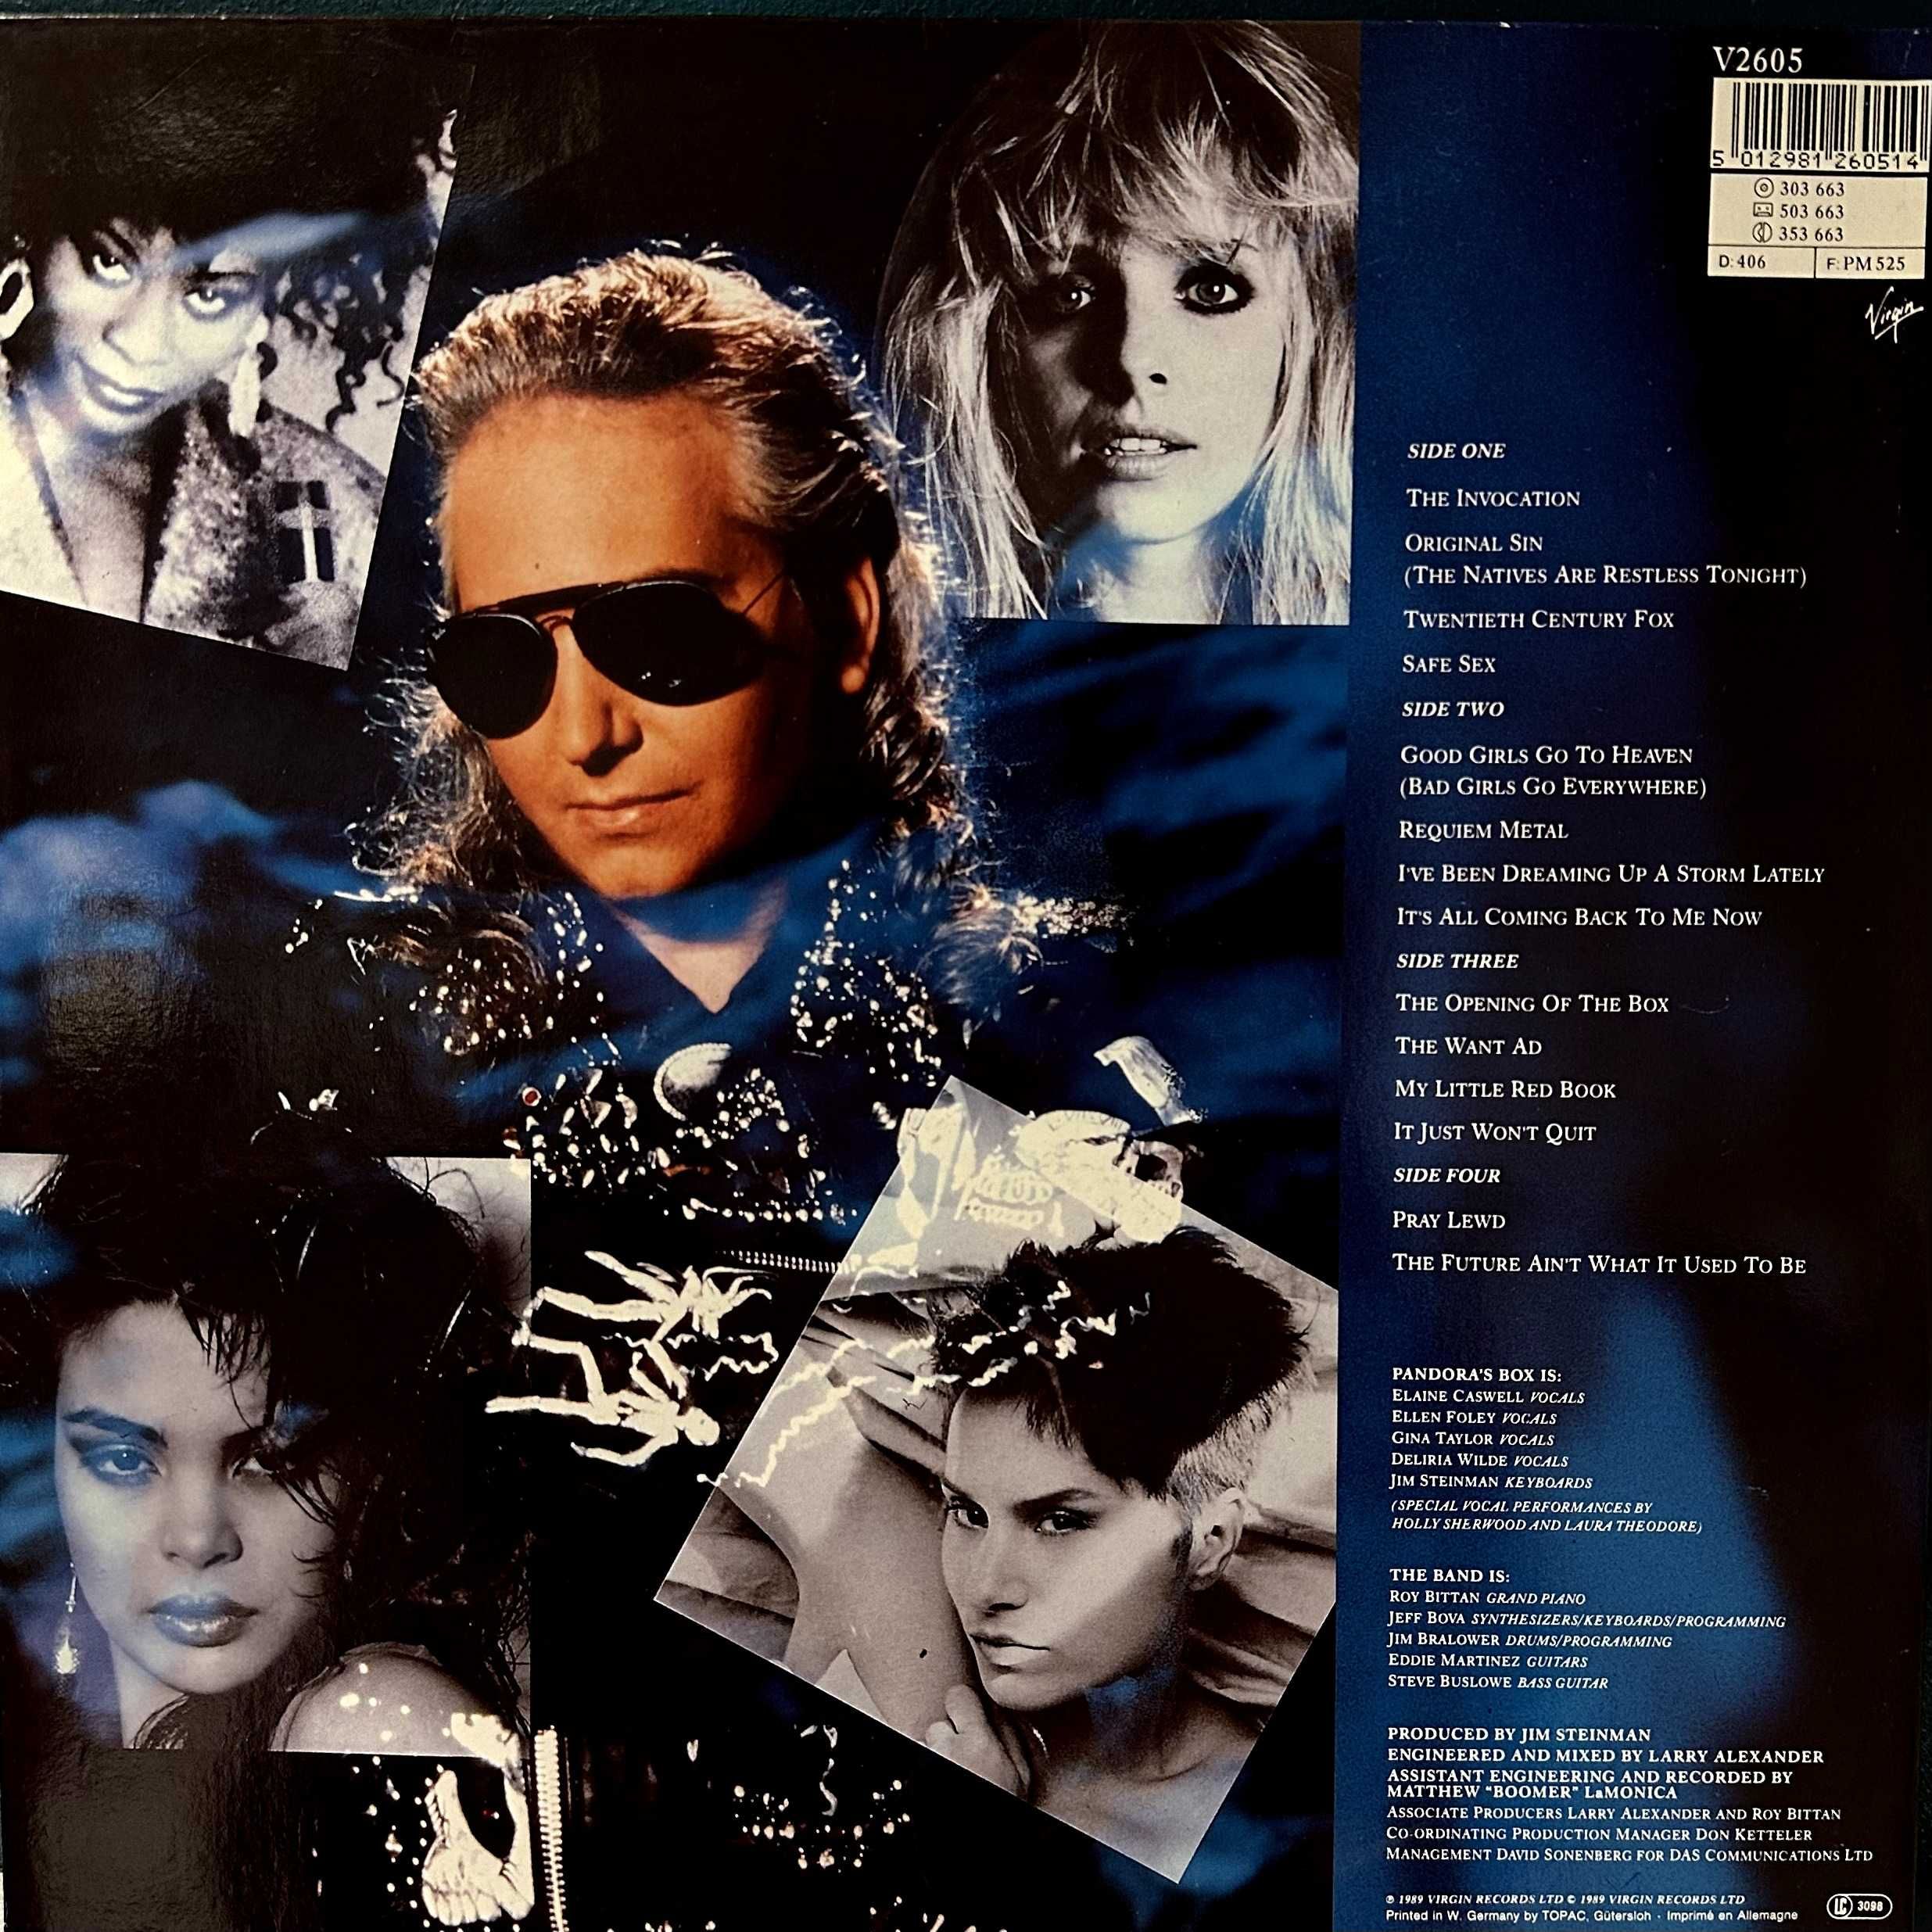 Pandora's Box - Original Sin (Vinyl, 1989, Germany)